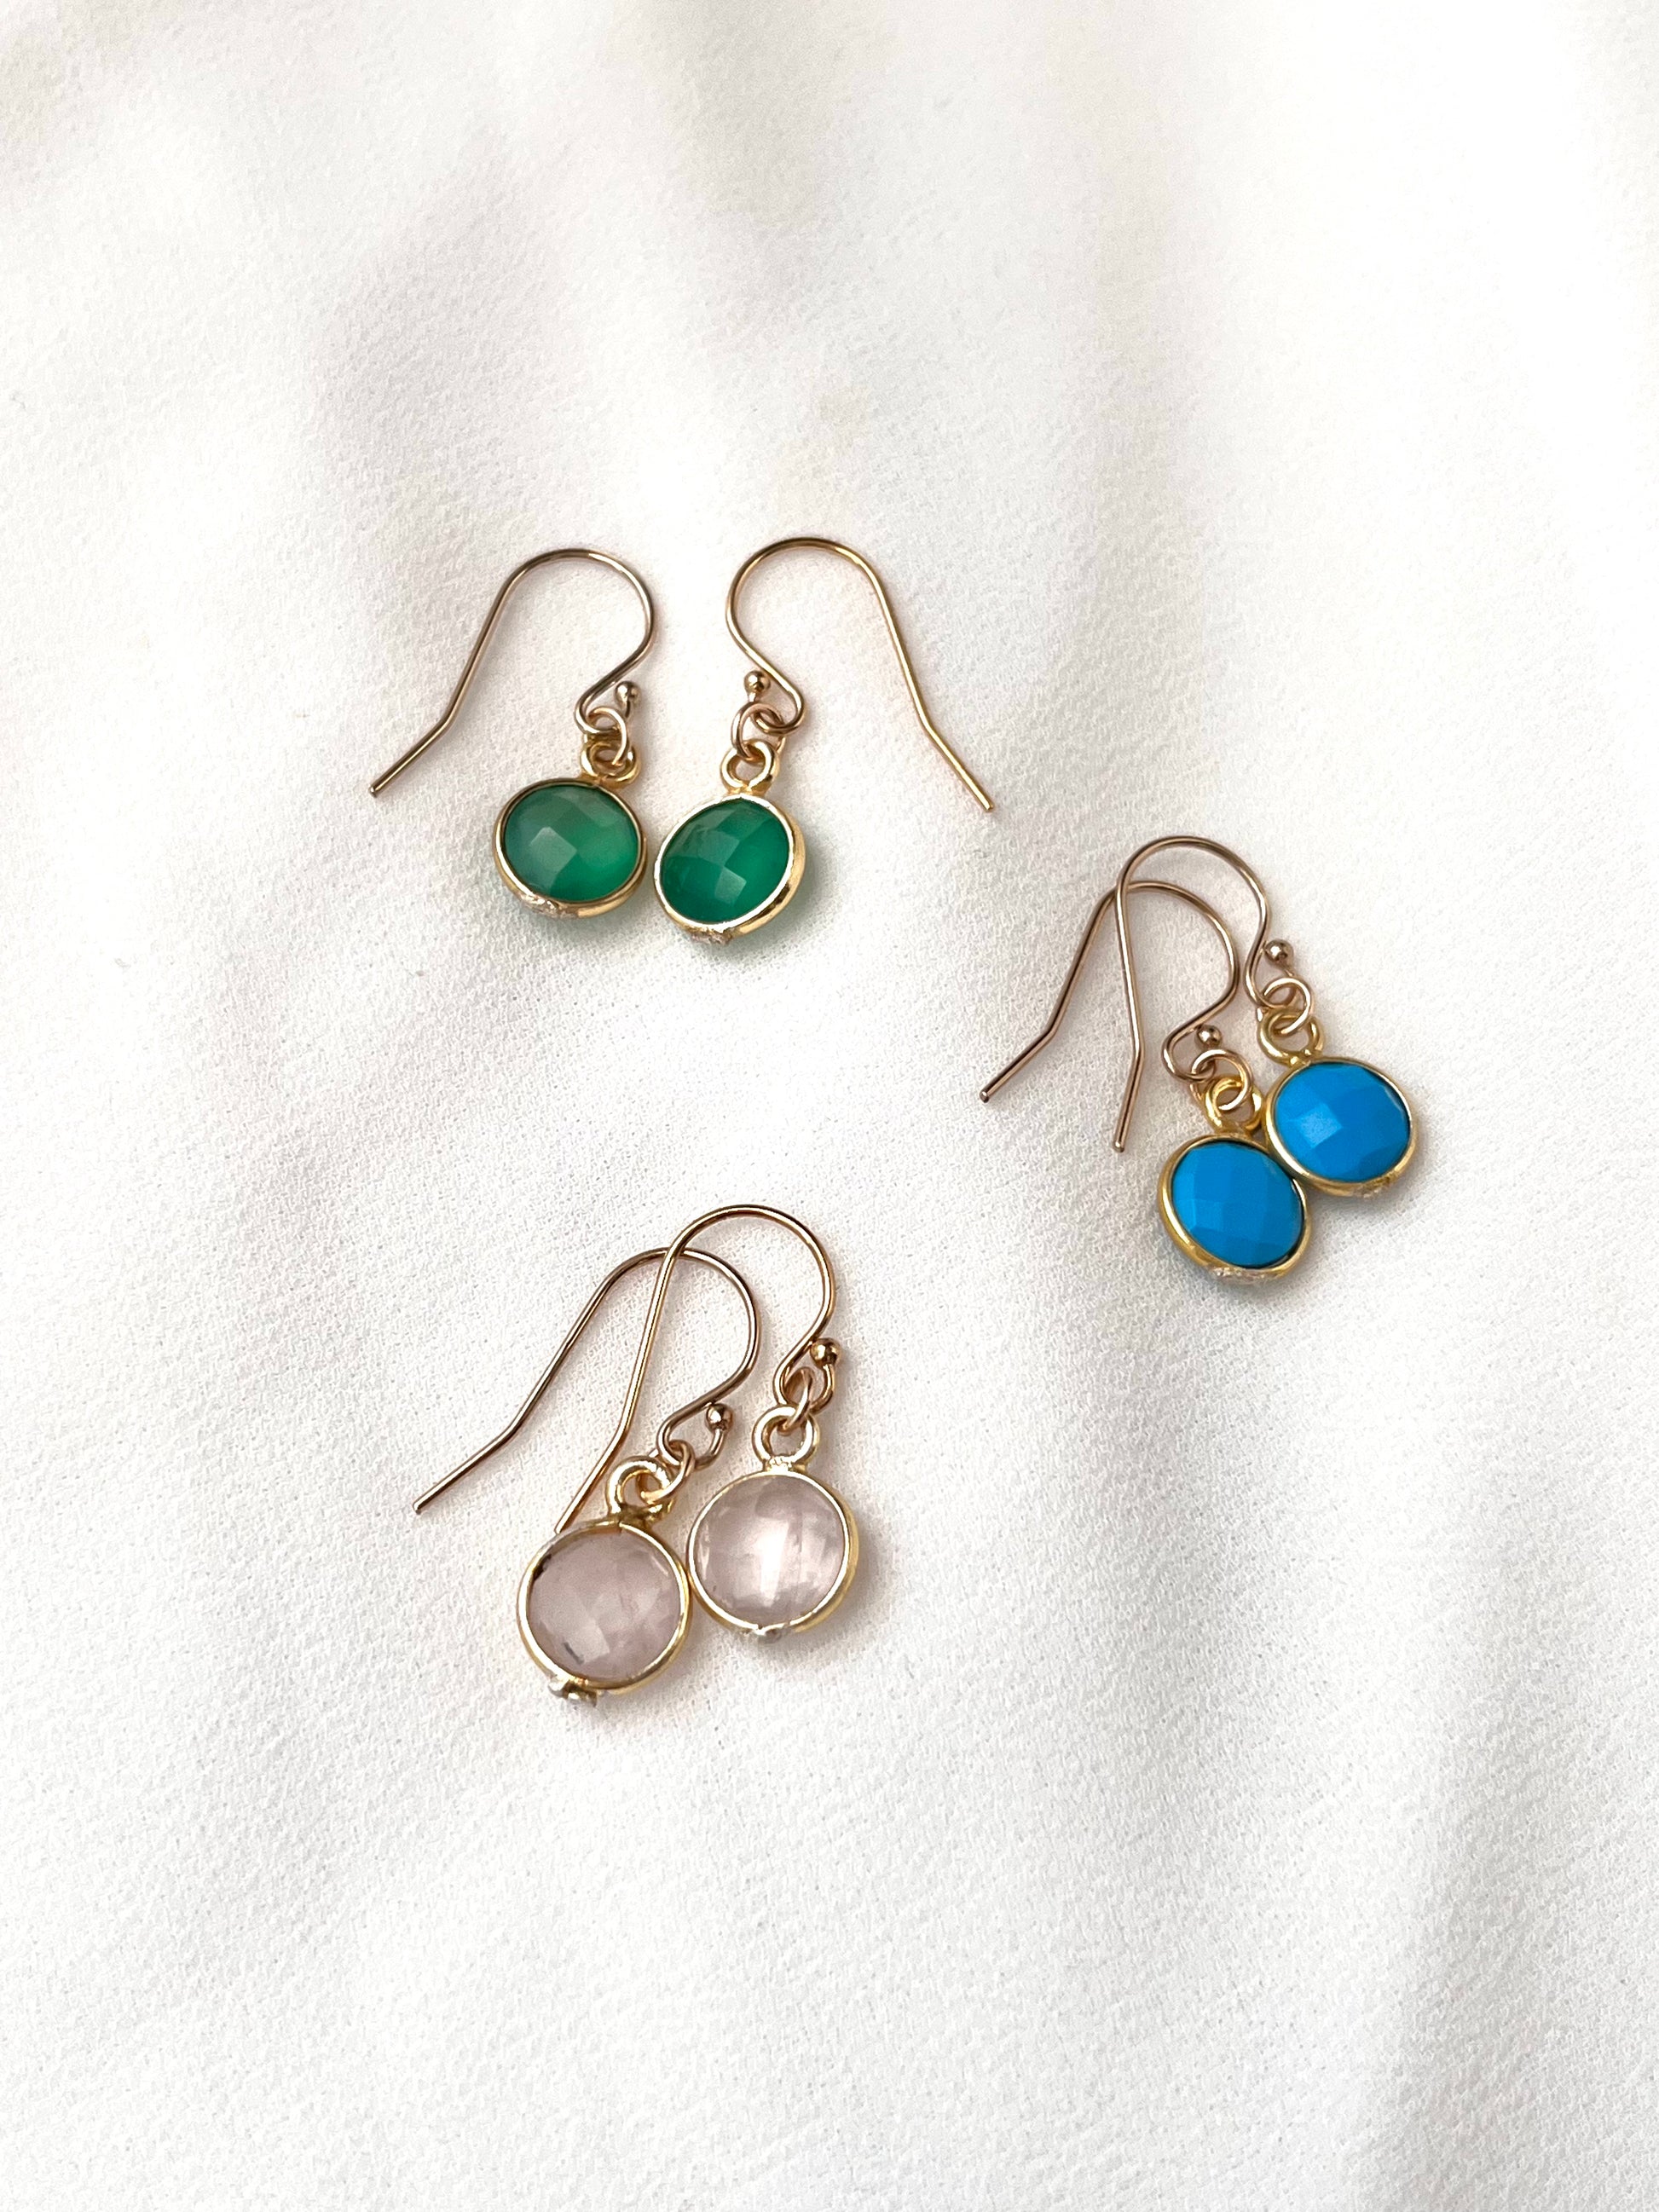 Minimalist Gemstone Drop Earrings, Turquoise Earrings, Rose Quartz Earrings, Green Onyx Earrings, Dainty Drop Earrings, Gift For Her